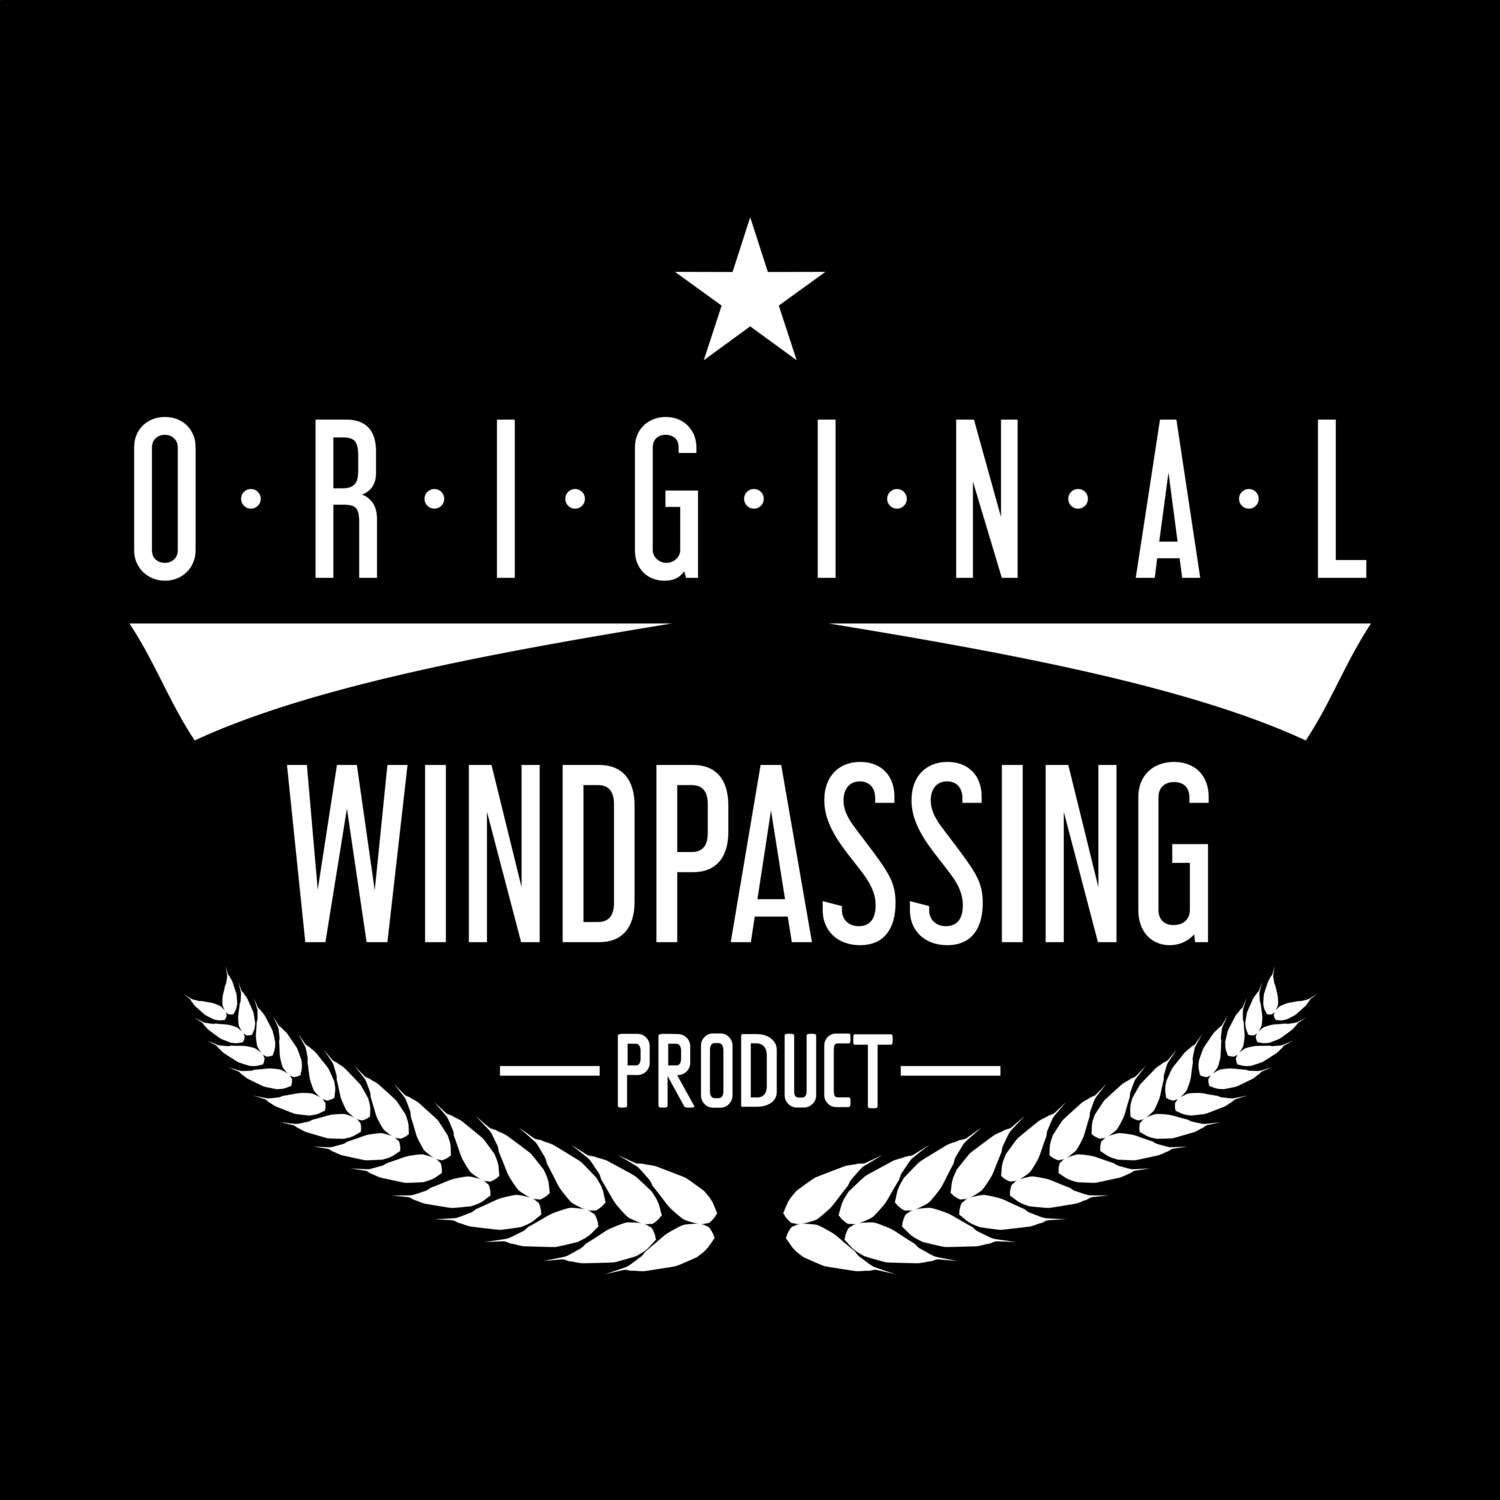 Windpassing T-Shirt »Original Product«